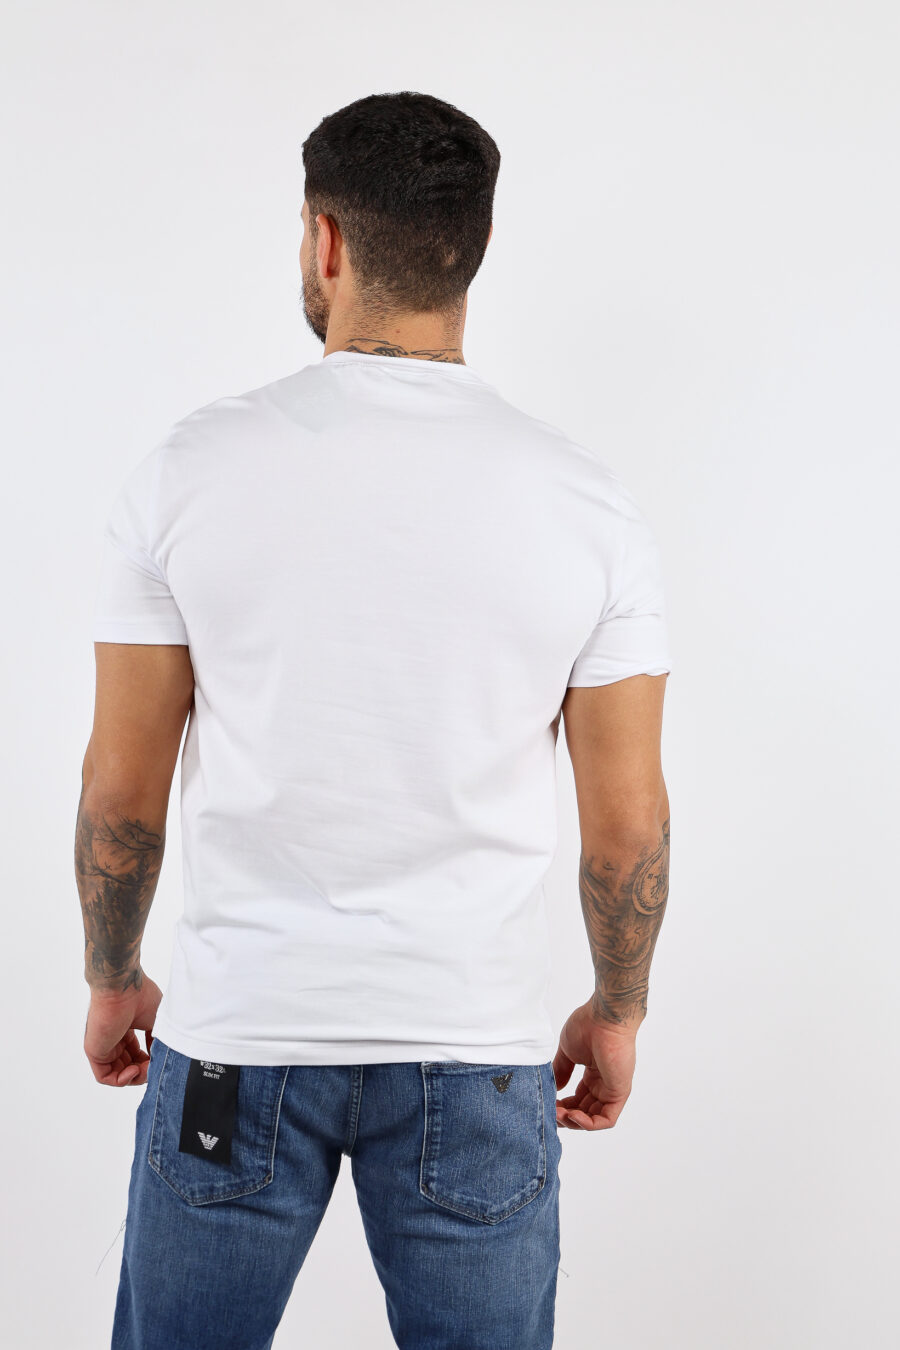 Weißes T-Shirt mit neon-silbernem "lux identity" Maxilogo - BLS Fashion 23